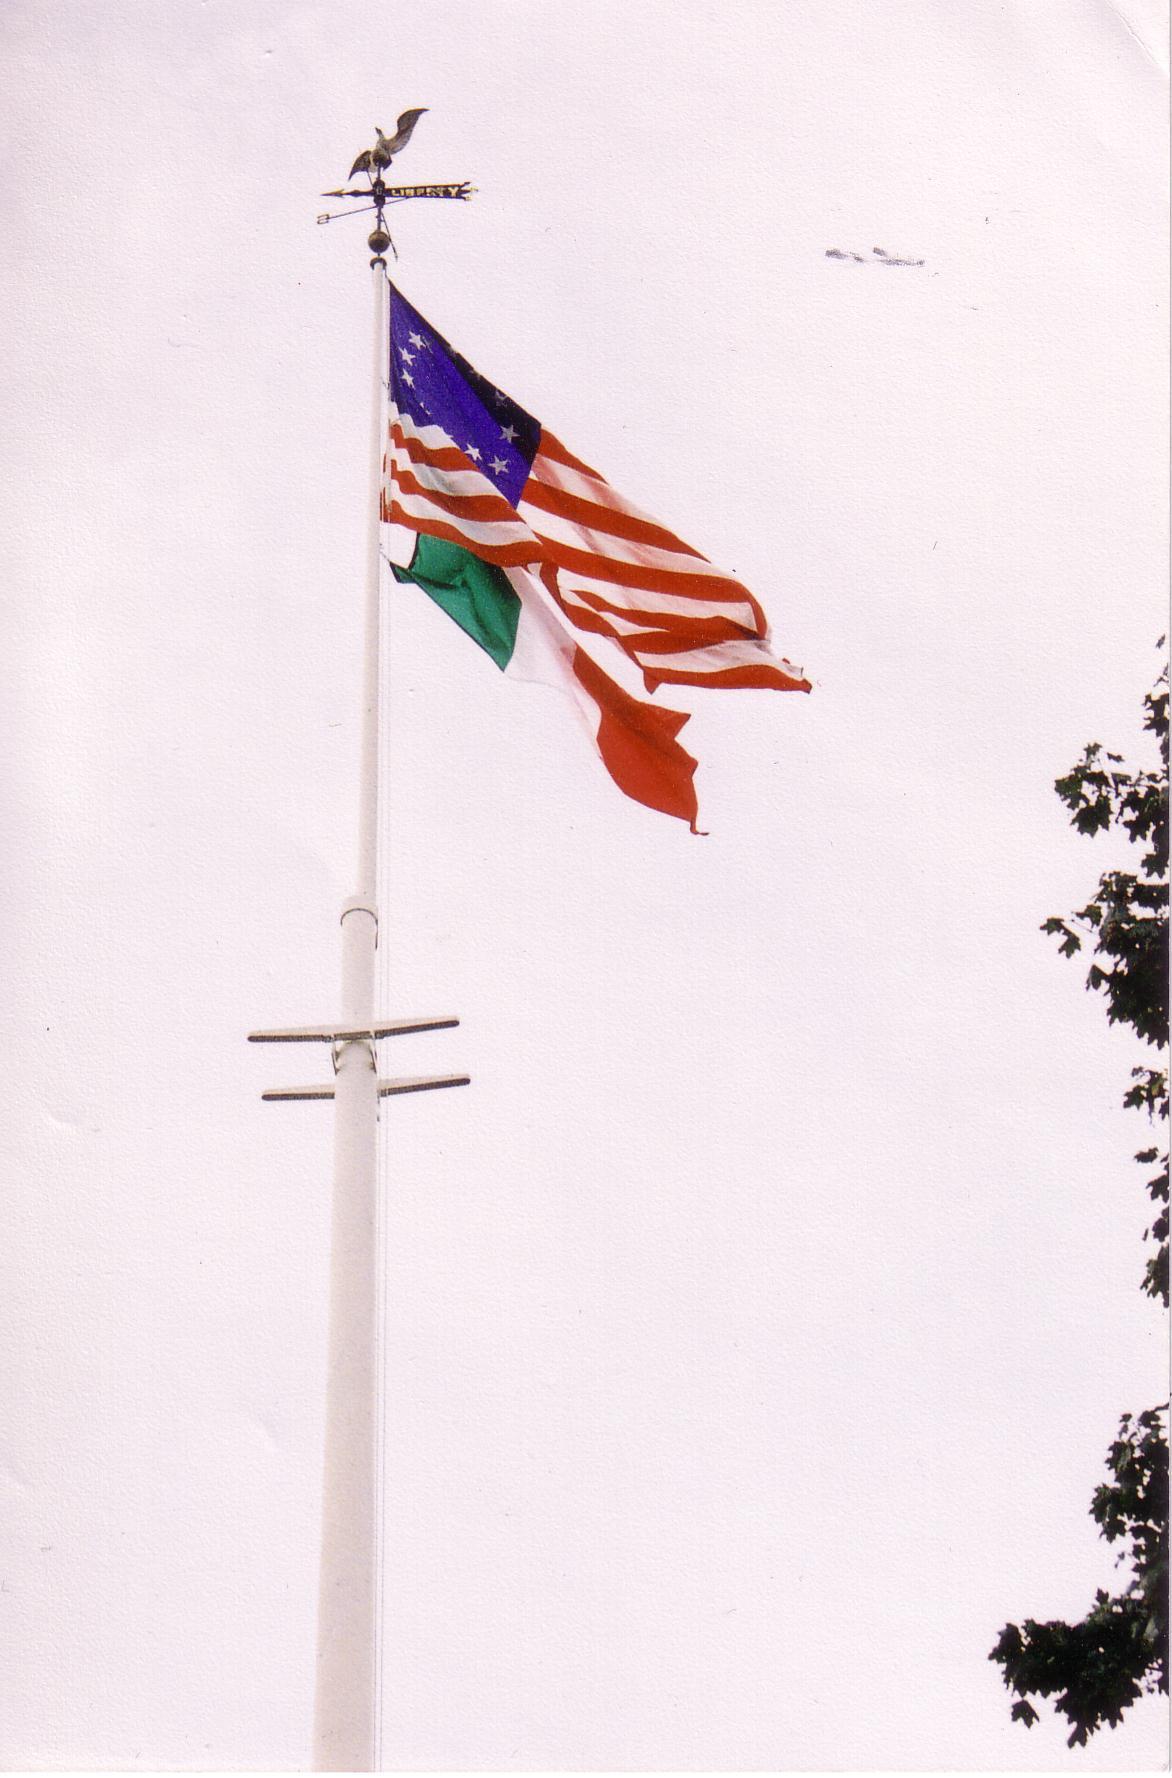 Columbus Day Flag Raising (2)